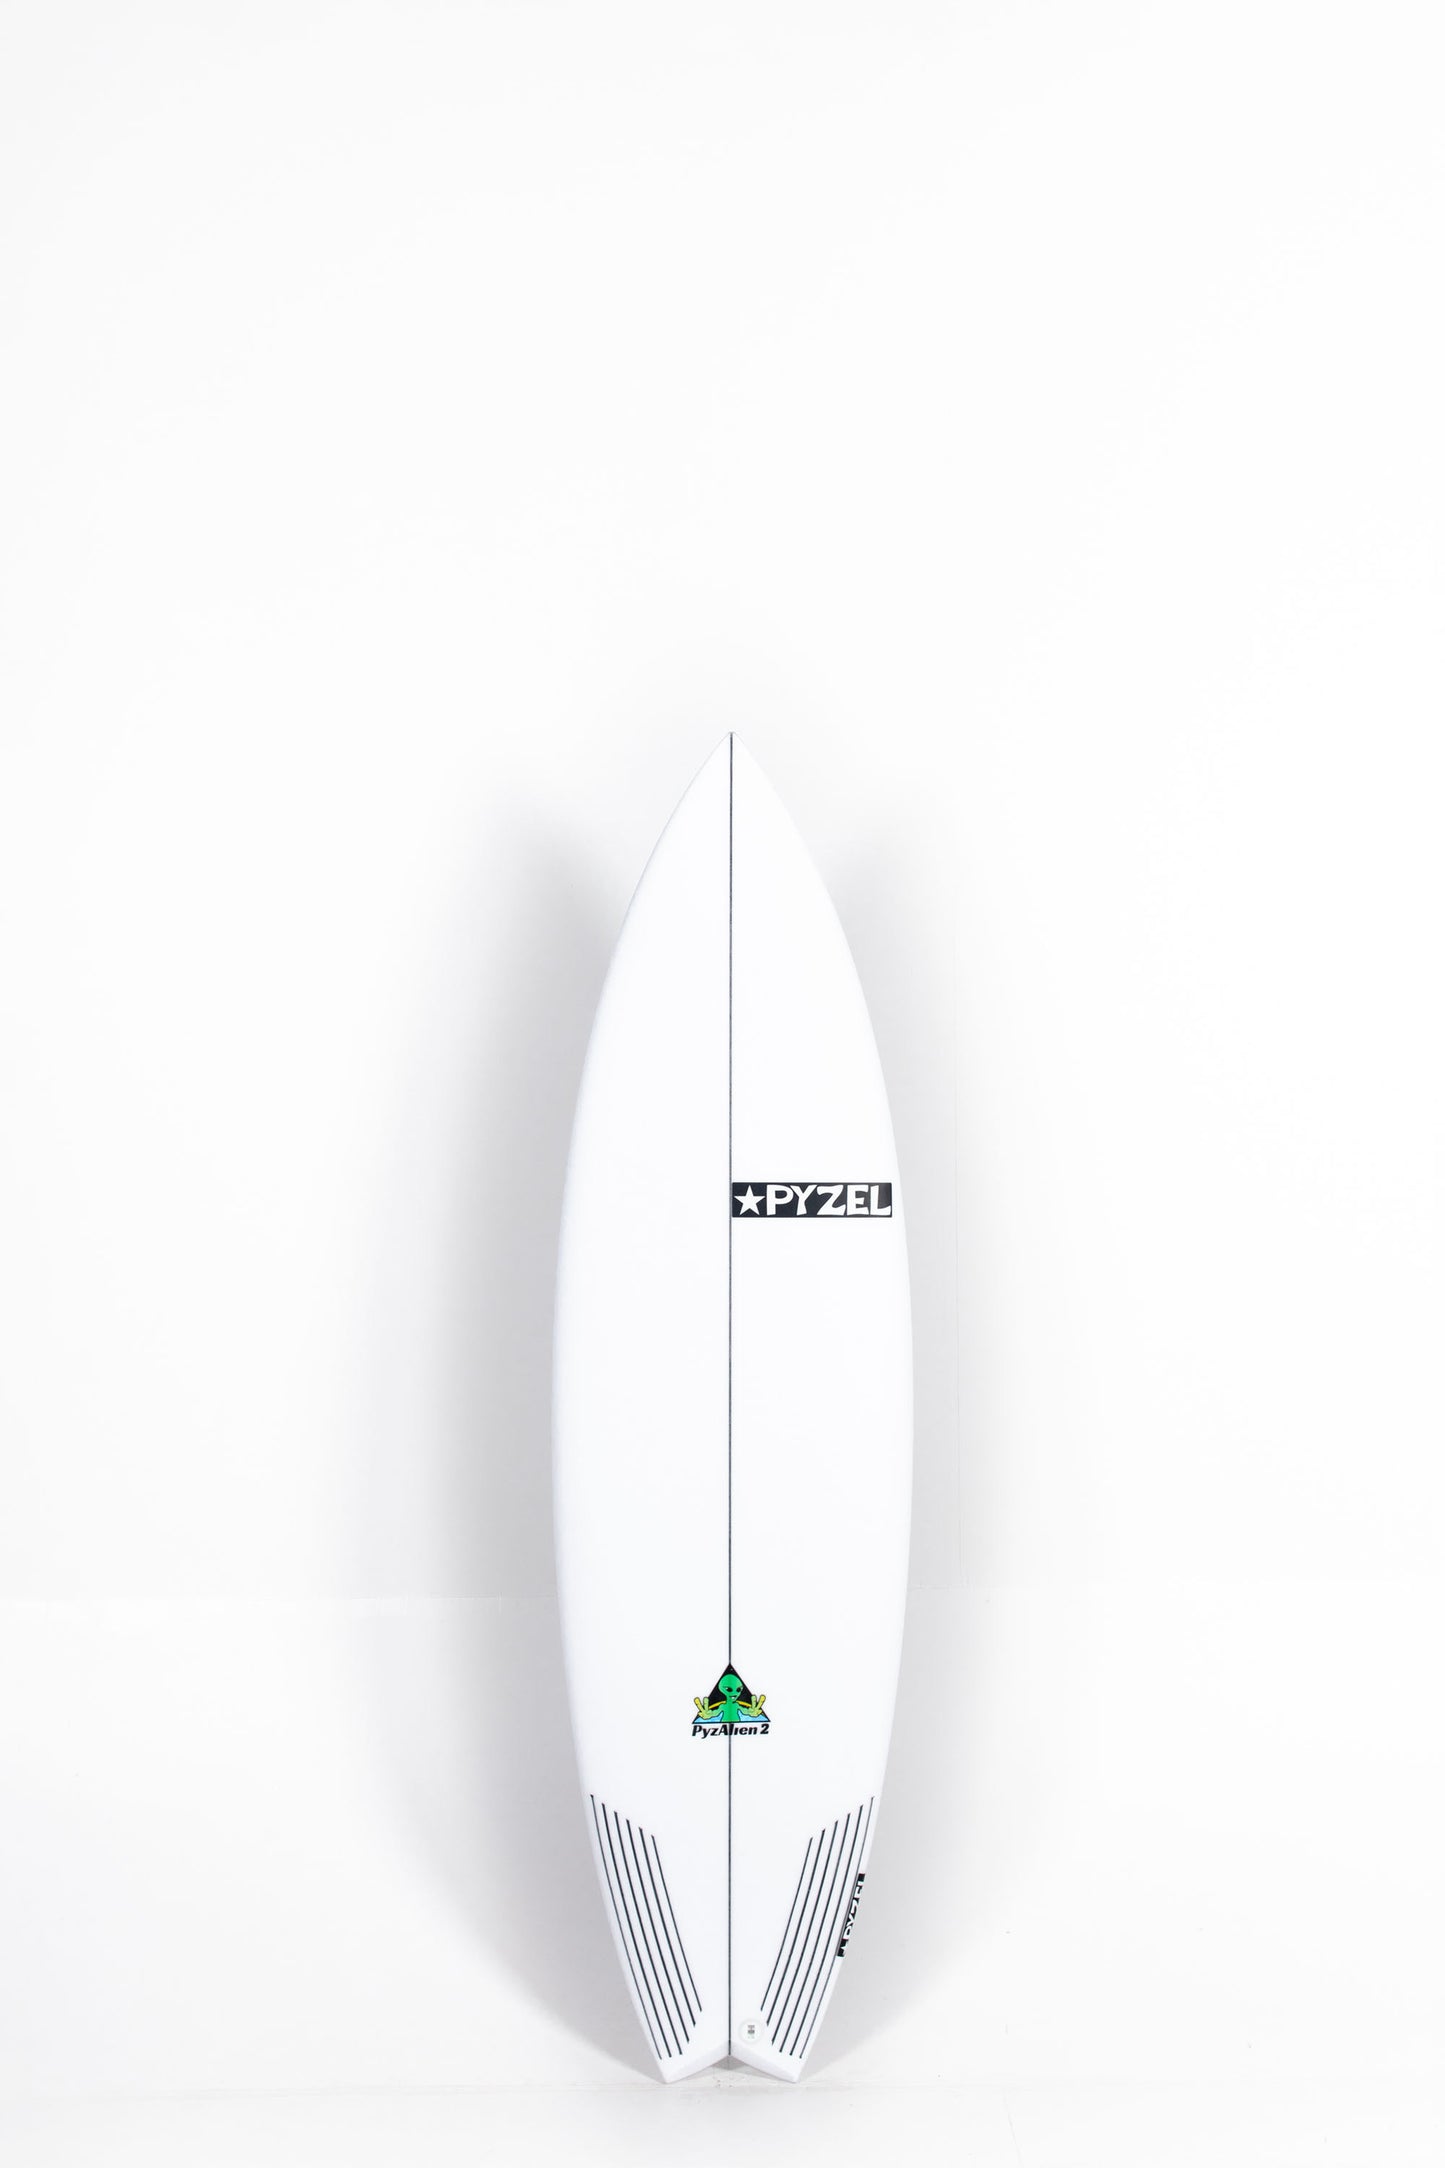 Pukas Surf Shop - Pyzel Surfboards - PYZALIEN II - 6'0" x 19 1/2 x 2 1/2 - 31,5L - Ref: 502477